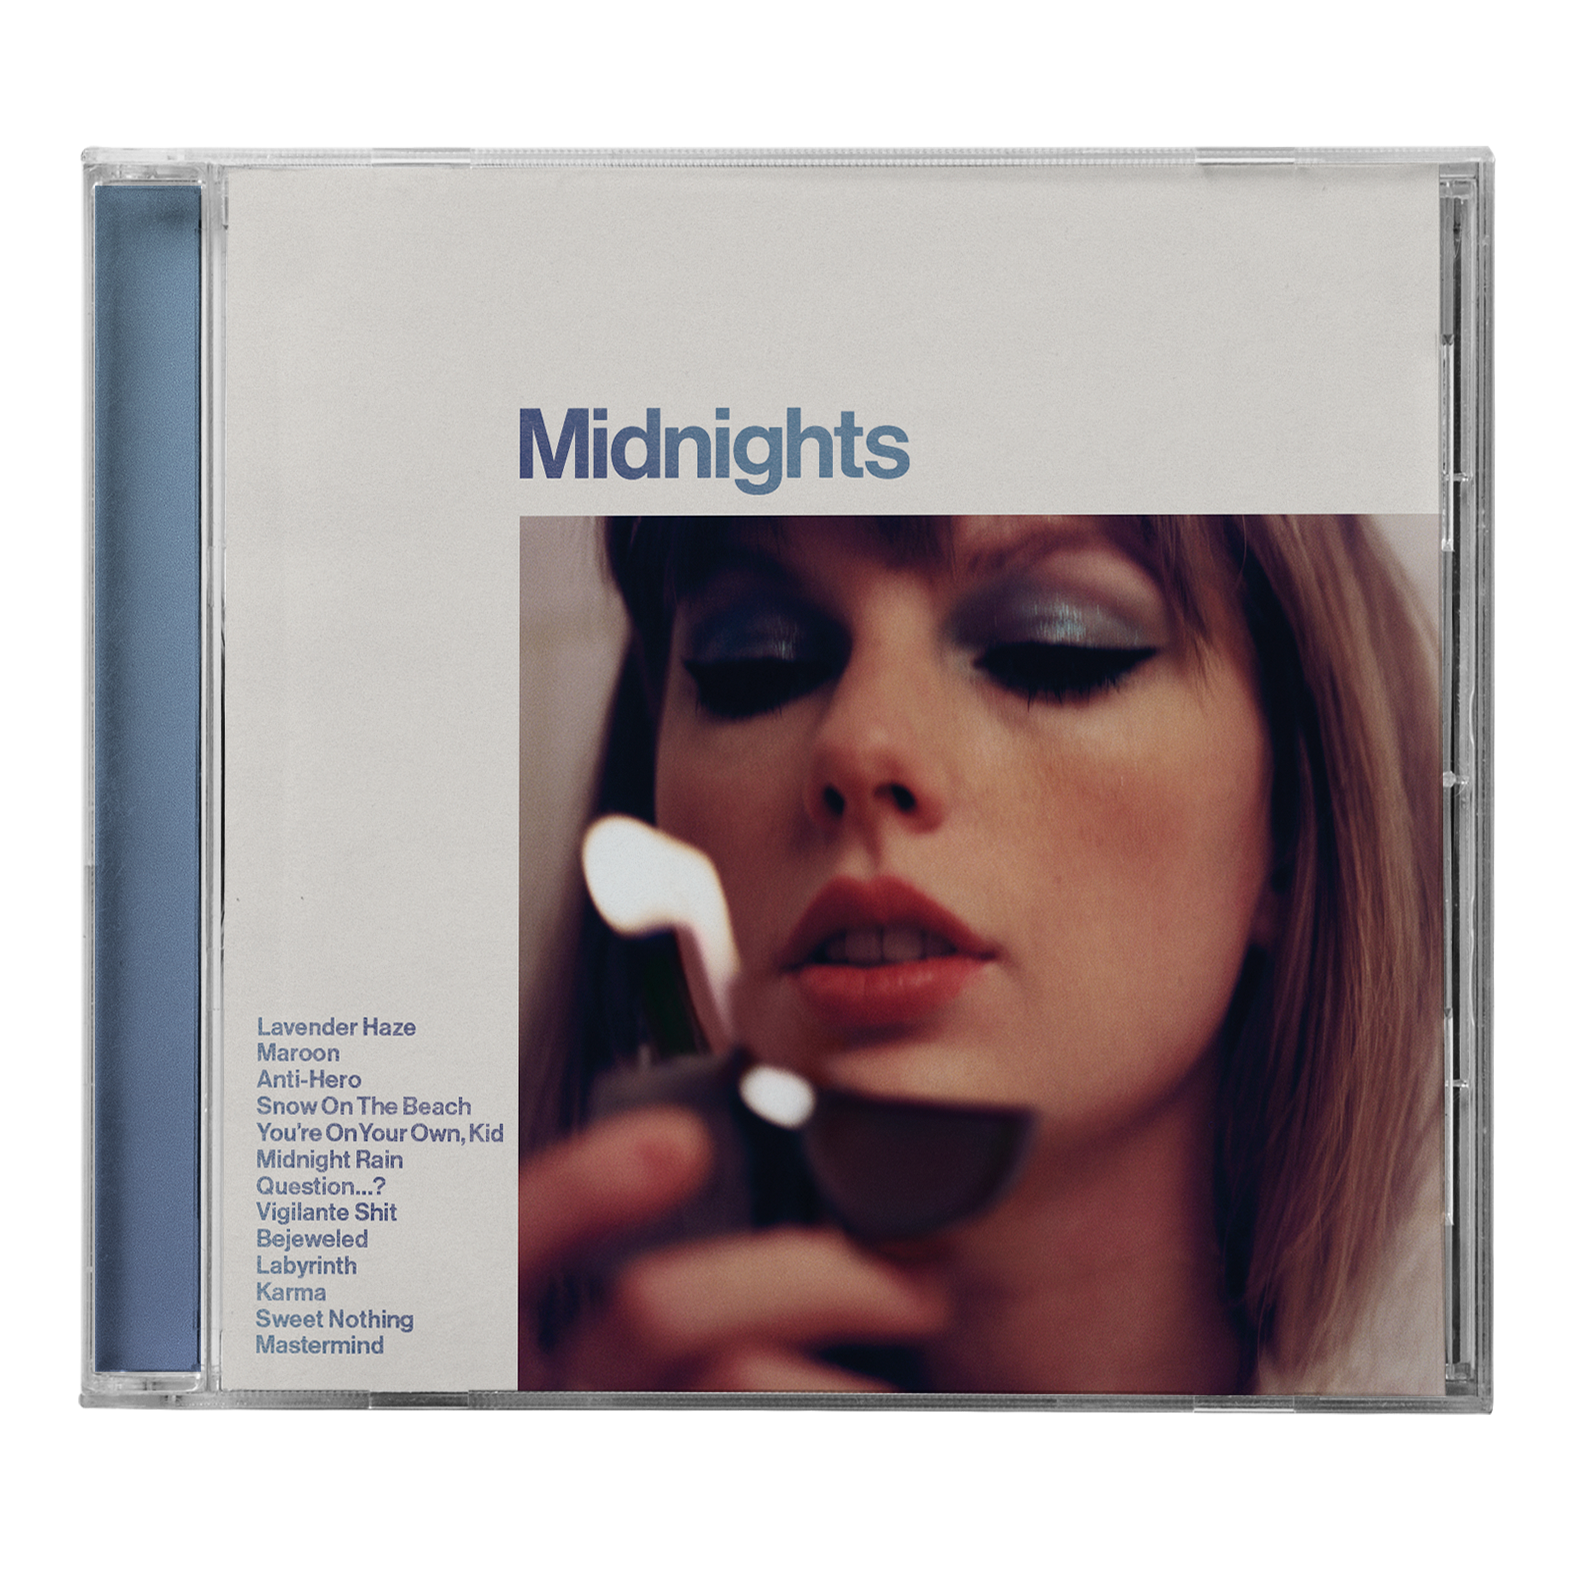 Taylor Swift - Midnights: Moonstone Blue Edition CD